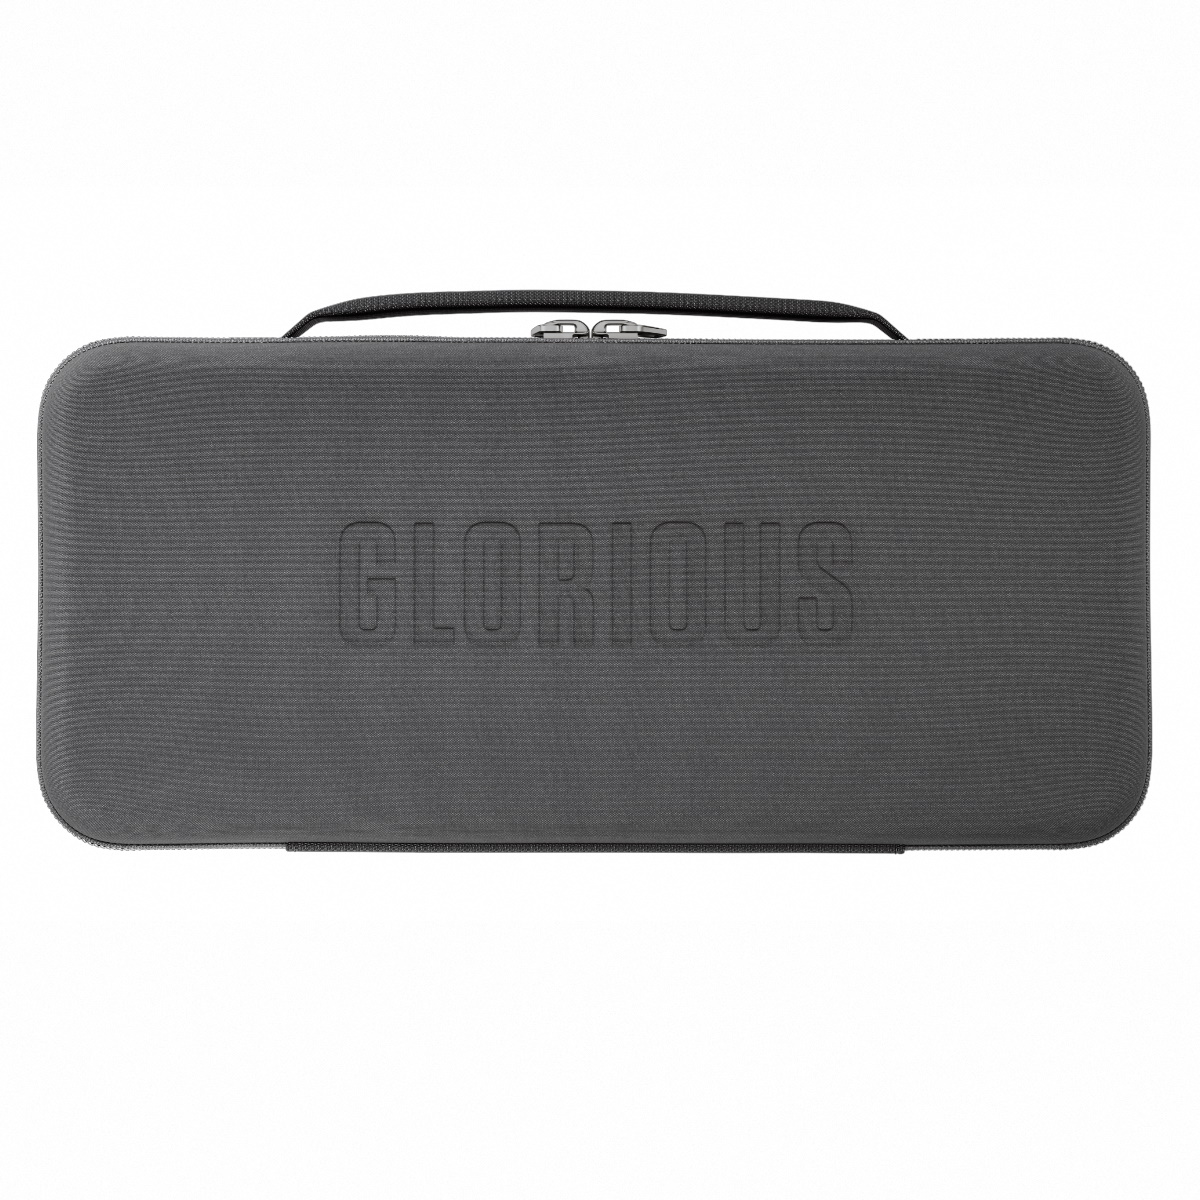 Glorious - Glorious GMMK Pro Keyboard Case (GLO-ACC-KBCASE)